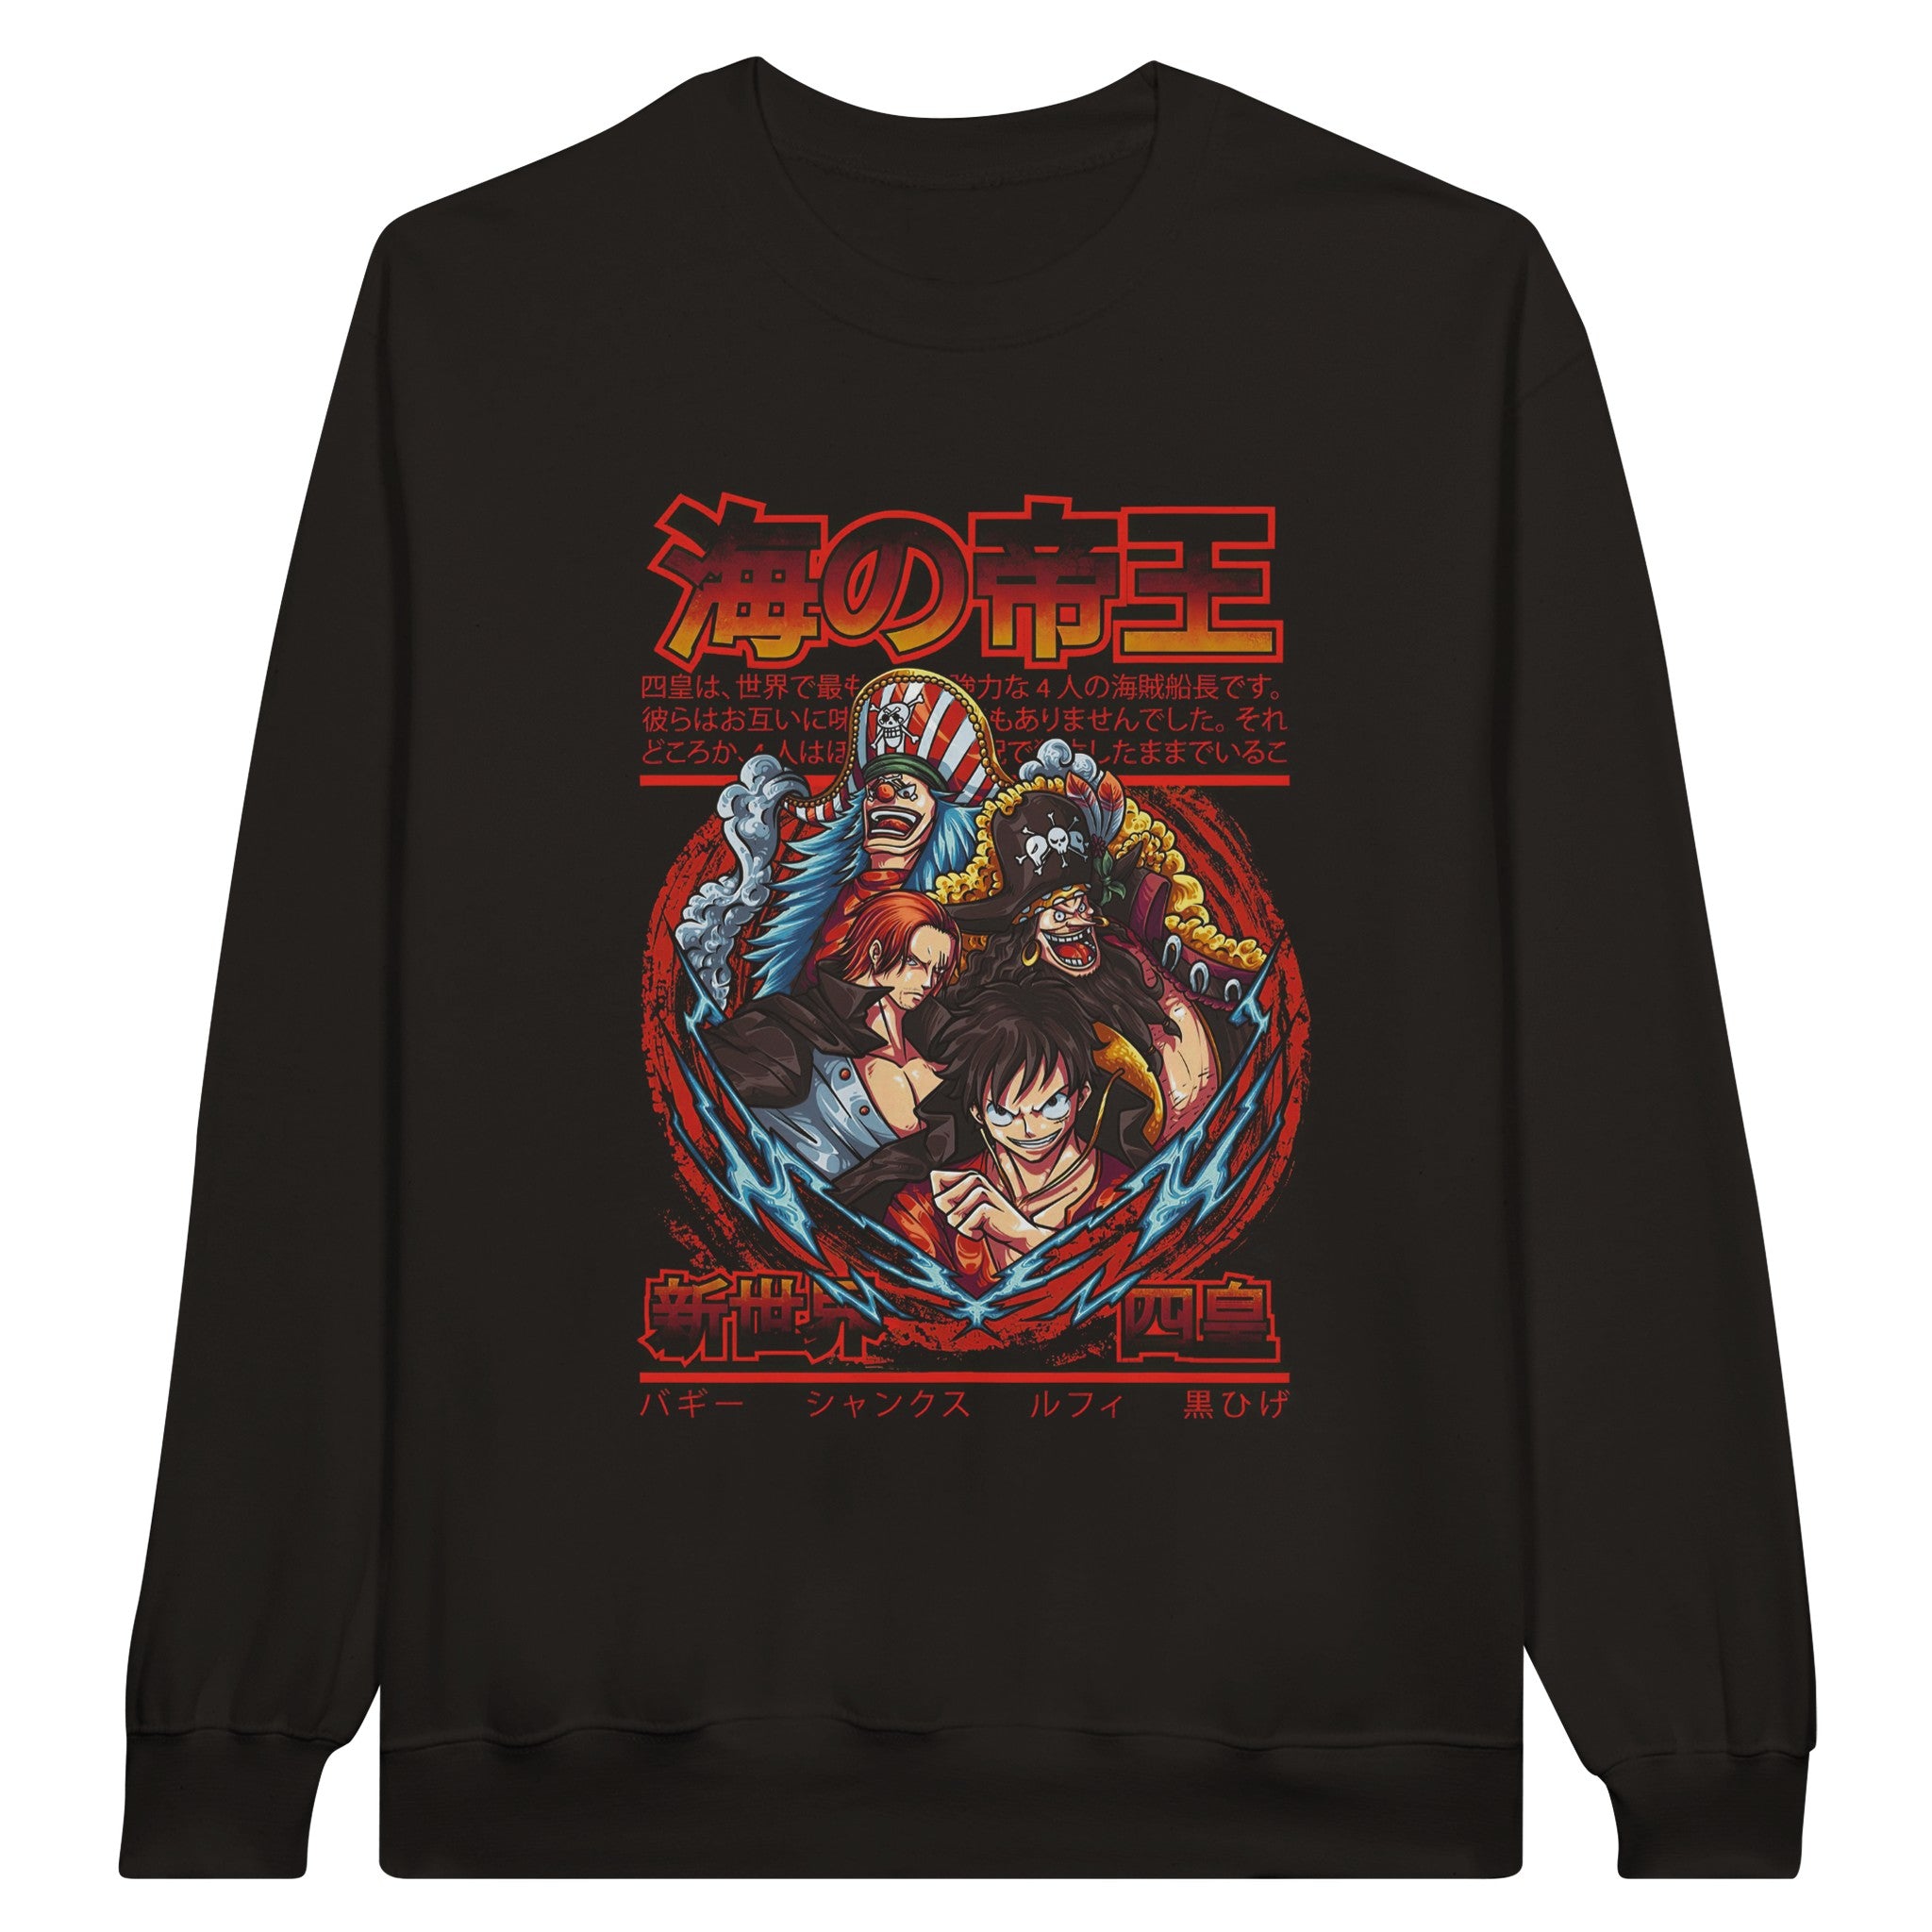 shop and buy One Piece Luffy anime clothing sweatshirt/jumper/longsleeve